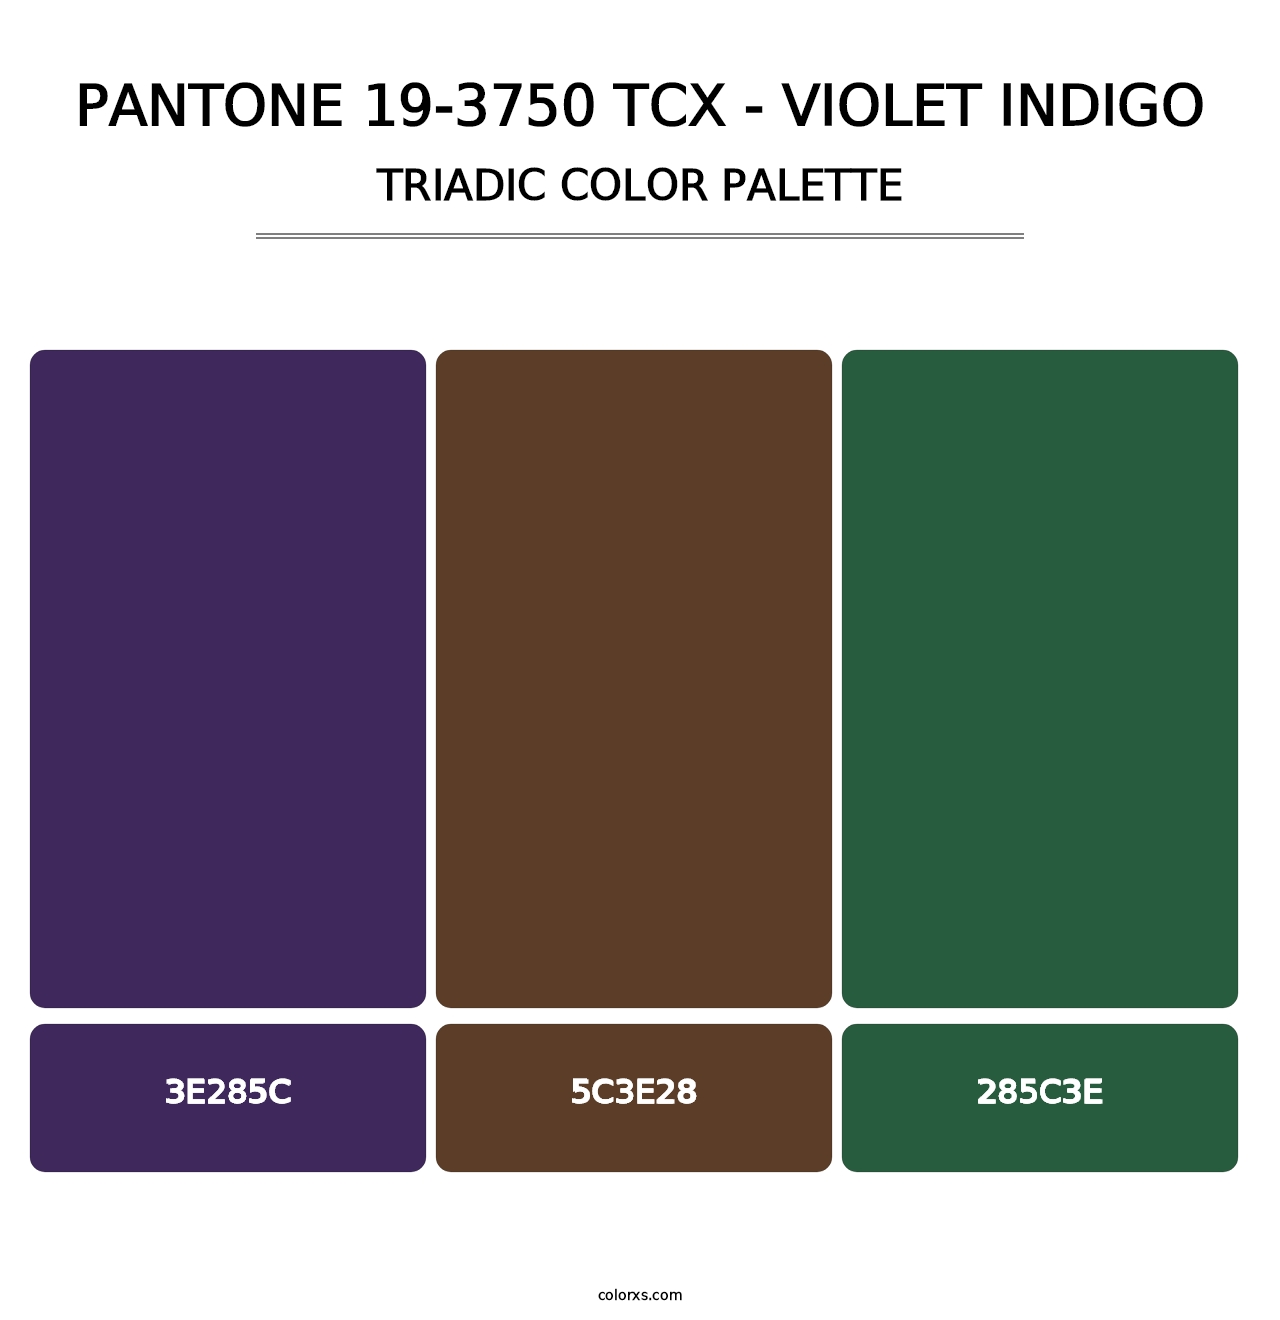 PANTONE 19-3750 TCX - Violet Indigo - Triadic Color Palette